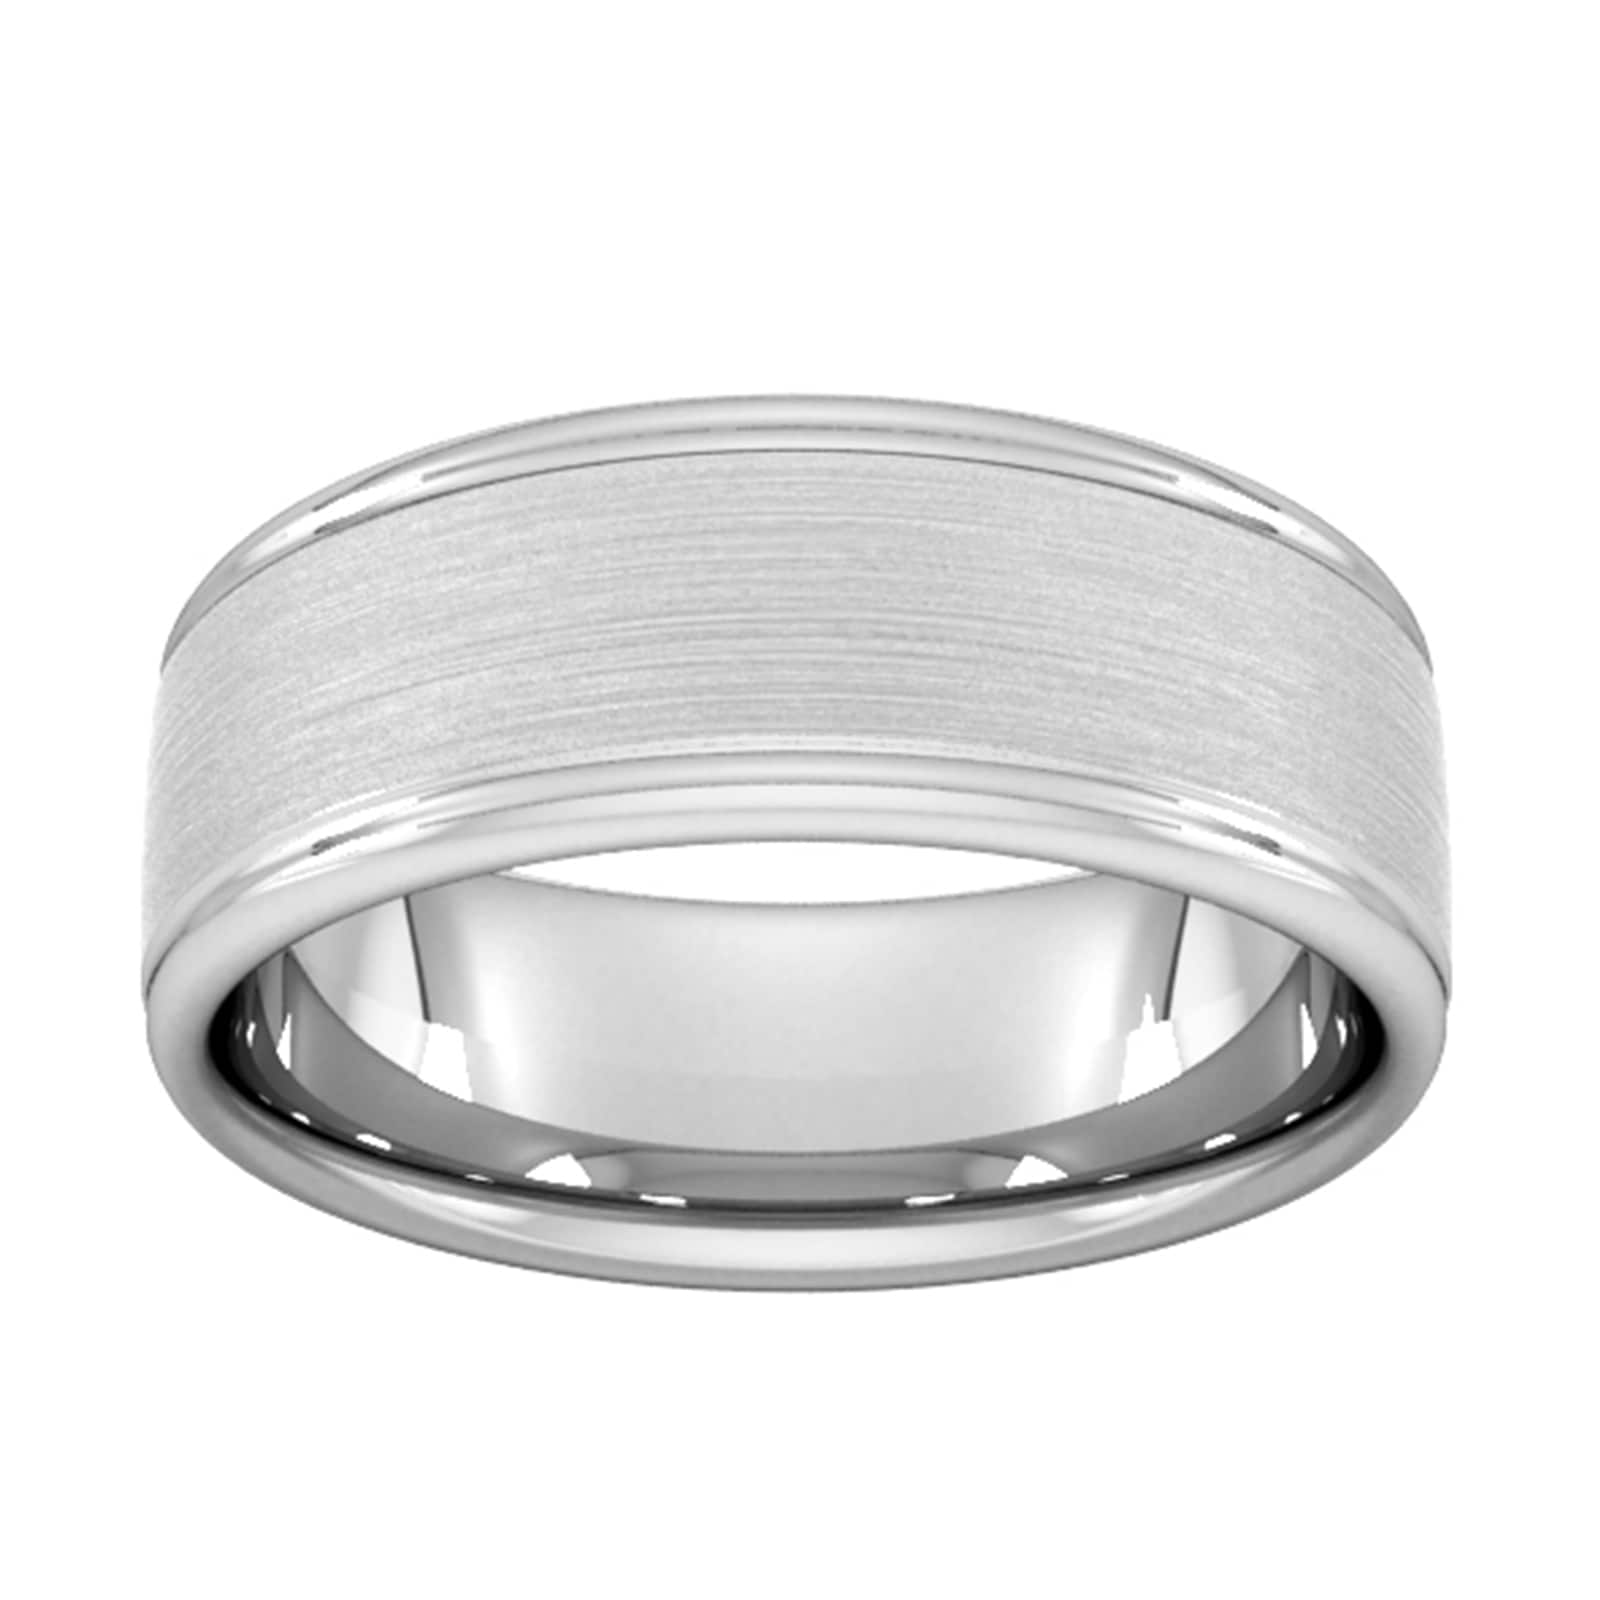 8mm Slight Court Extra Heavy Matt Centre With Grooves Wedding Ring In 950 Palladium - Ring Size U